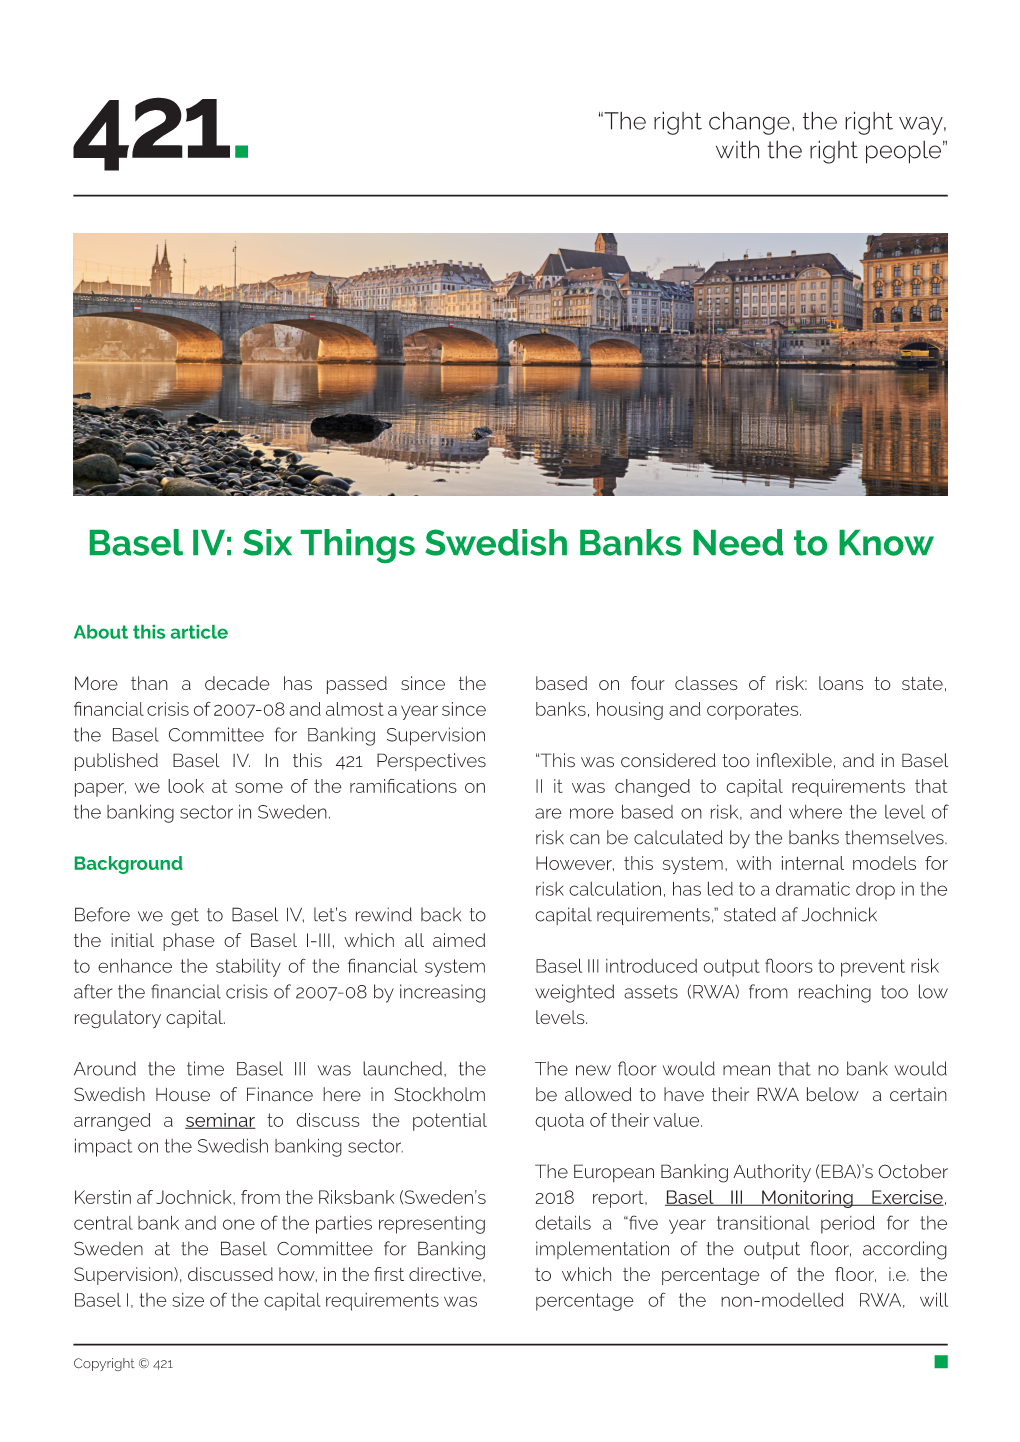 Basel IV: Six Things Swedish Banks Need to Know